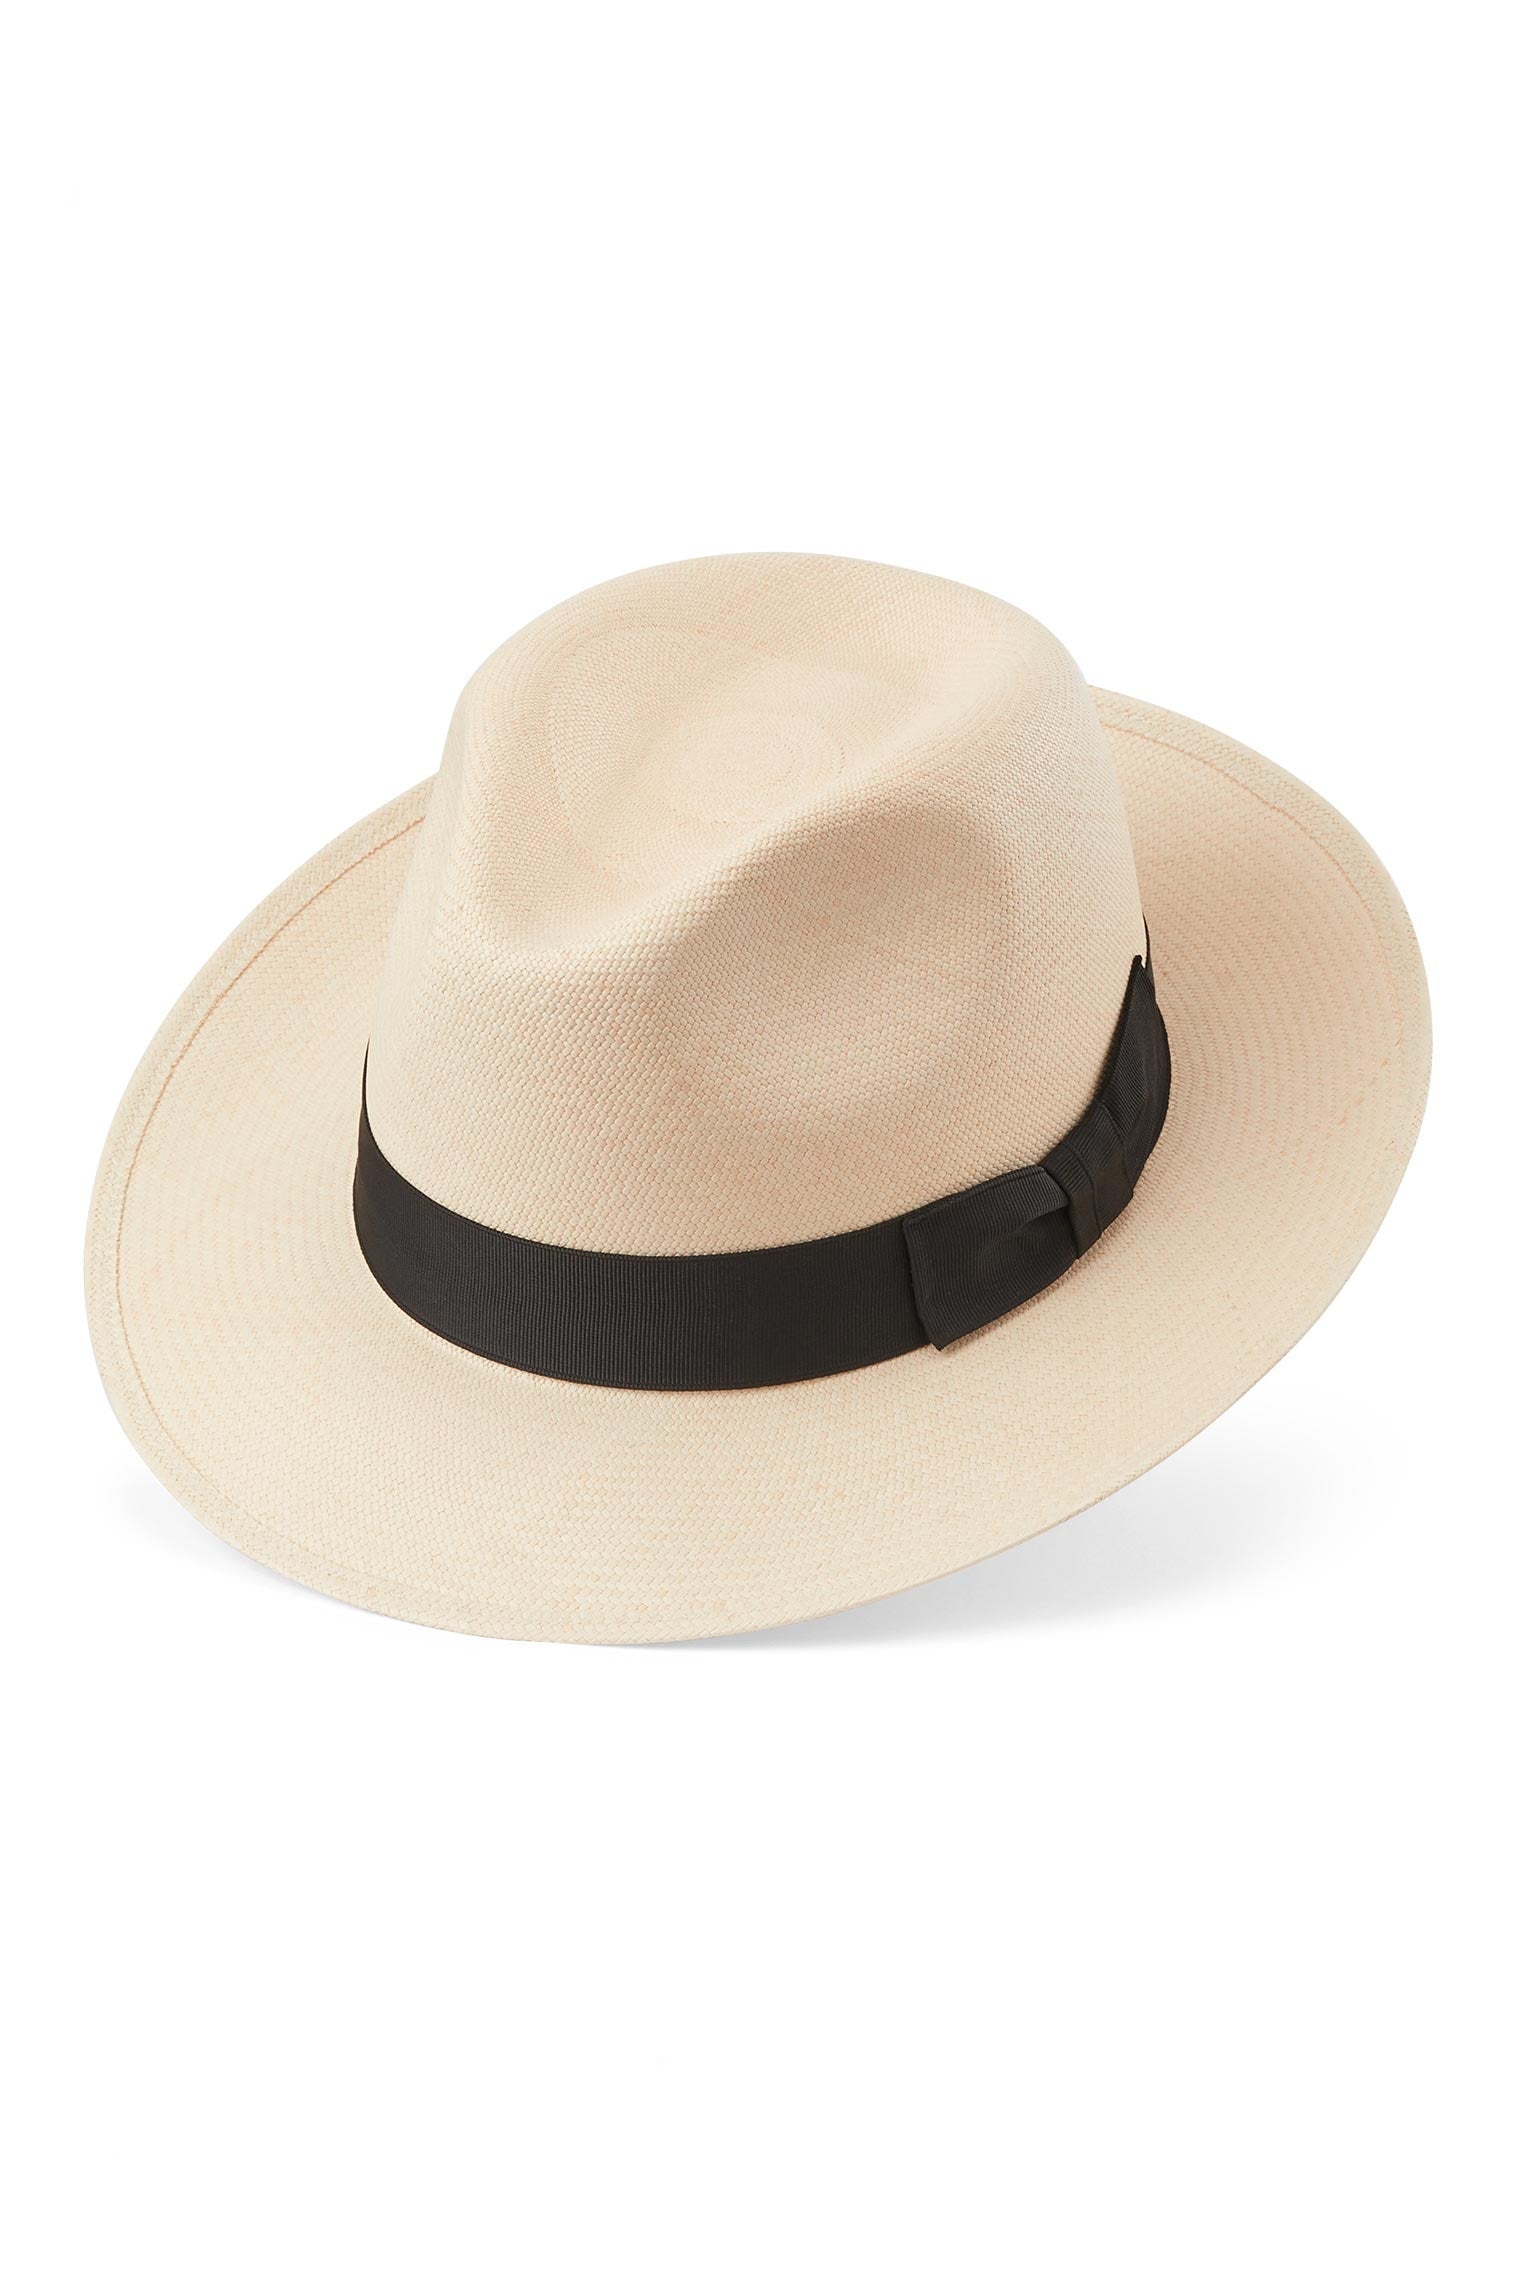 Fairbanks Panama - Panamas, Straw and Sun Hats for Men - Lock & Co. Hatters London UK